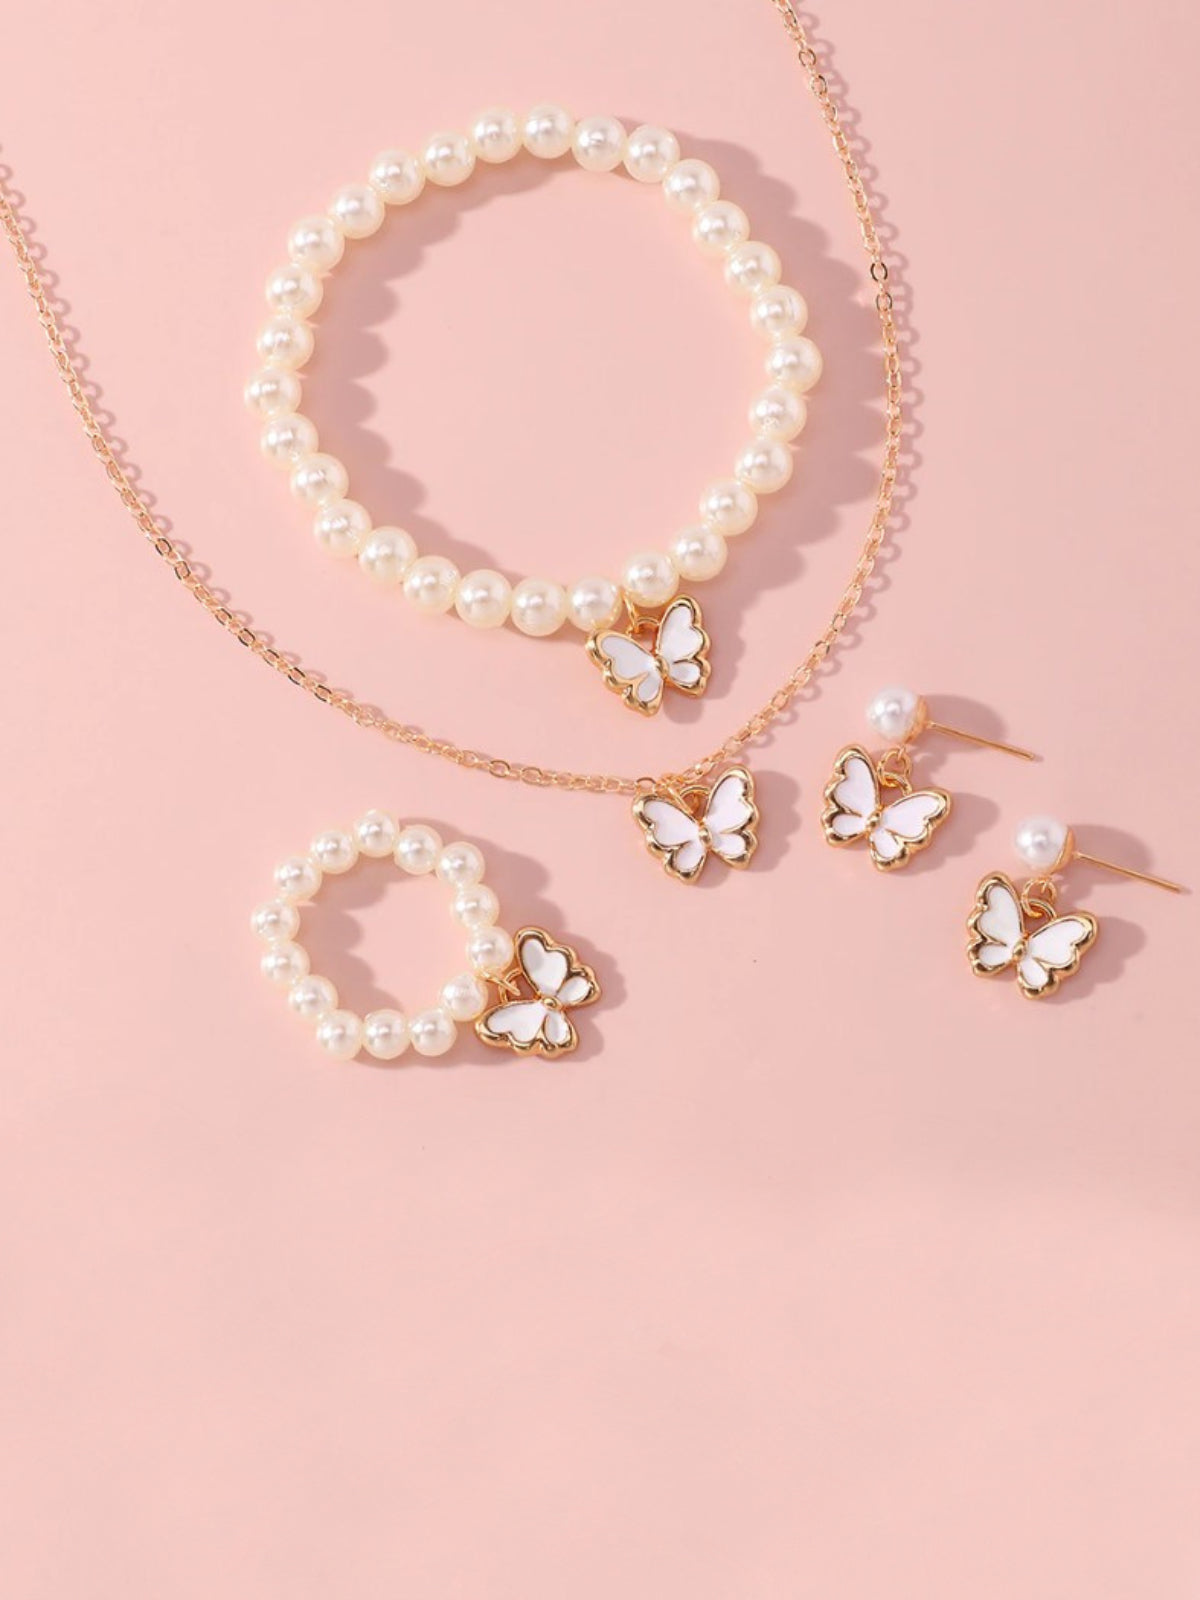 Mia Belle Girls Butterfly Pearl Jewelry Set | Girls Accessories